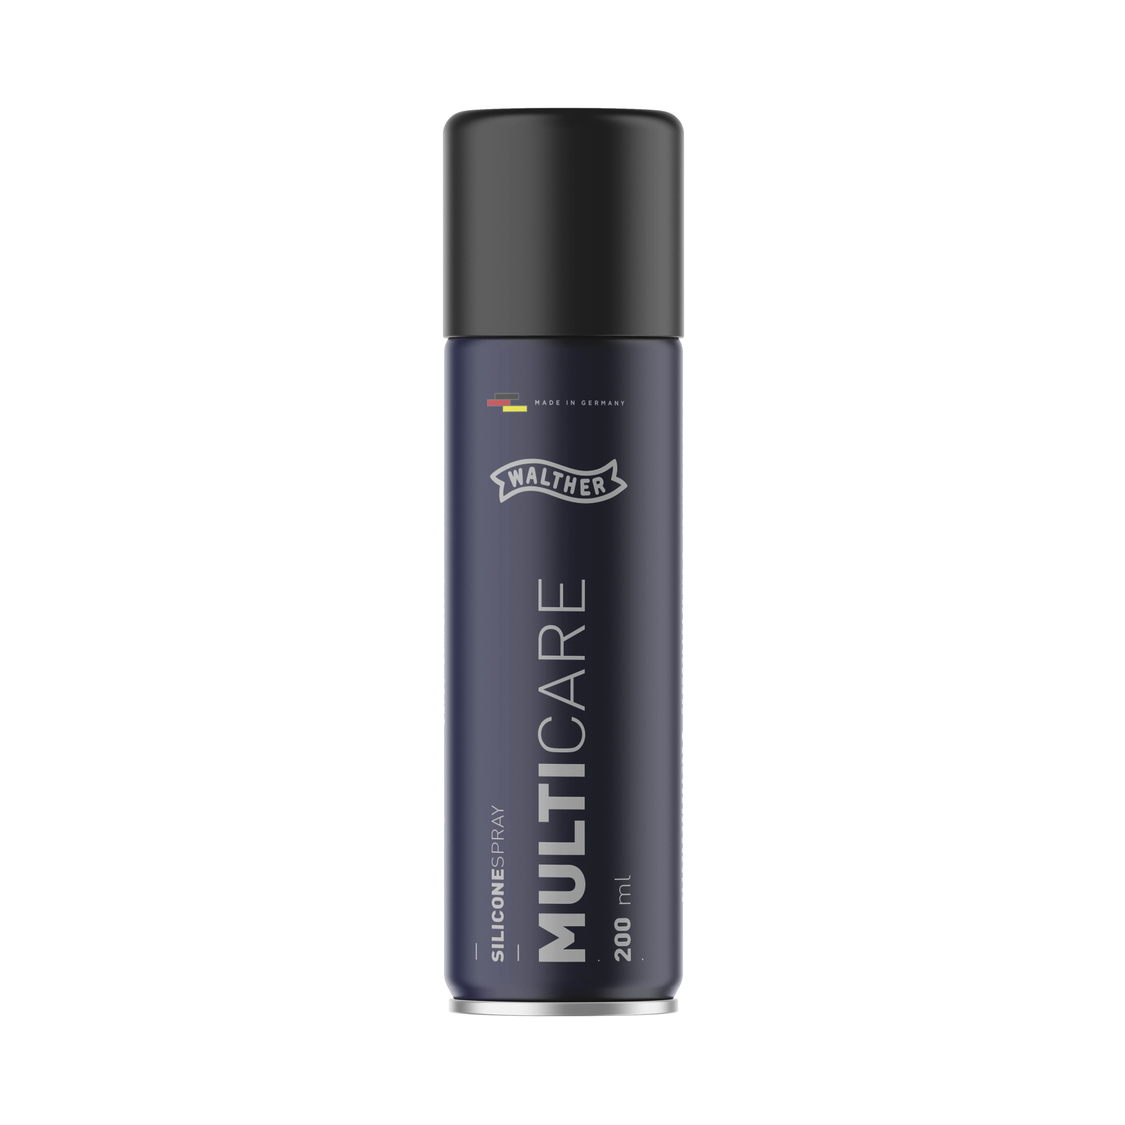 Umarex - Walther Multi Care Silicone Spray